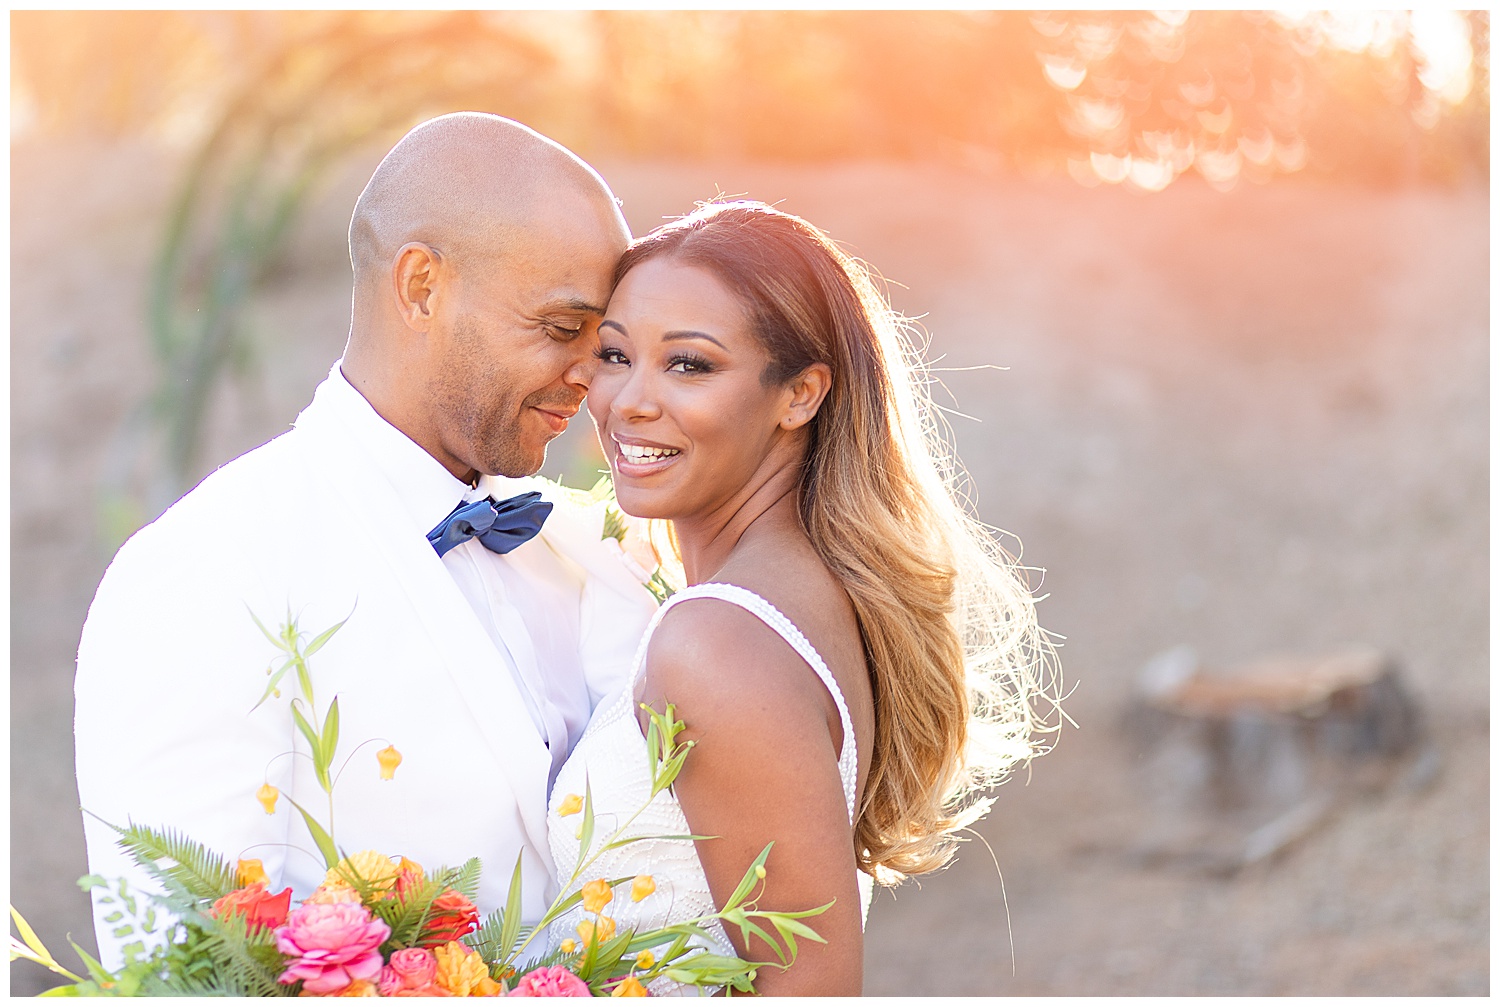 Colorful Palm Springs Inspired Wedding | Joyful Couple | Jade Alexandria Photography Huntsville, Alabama Wedding Photographer